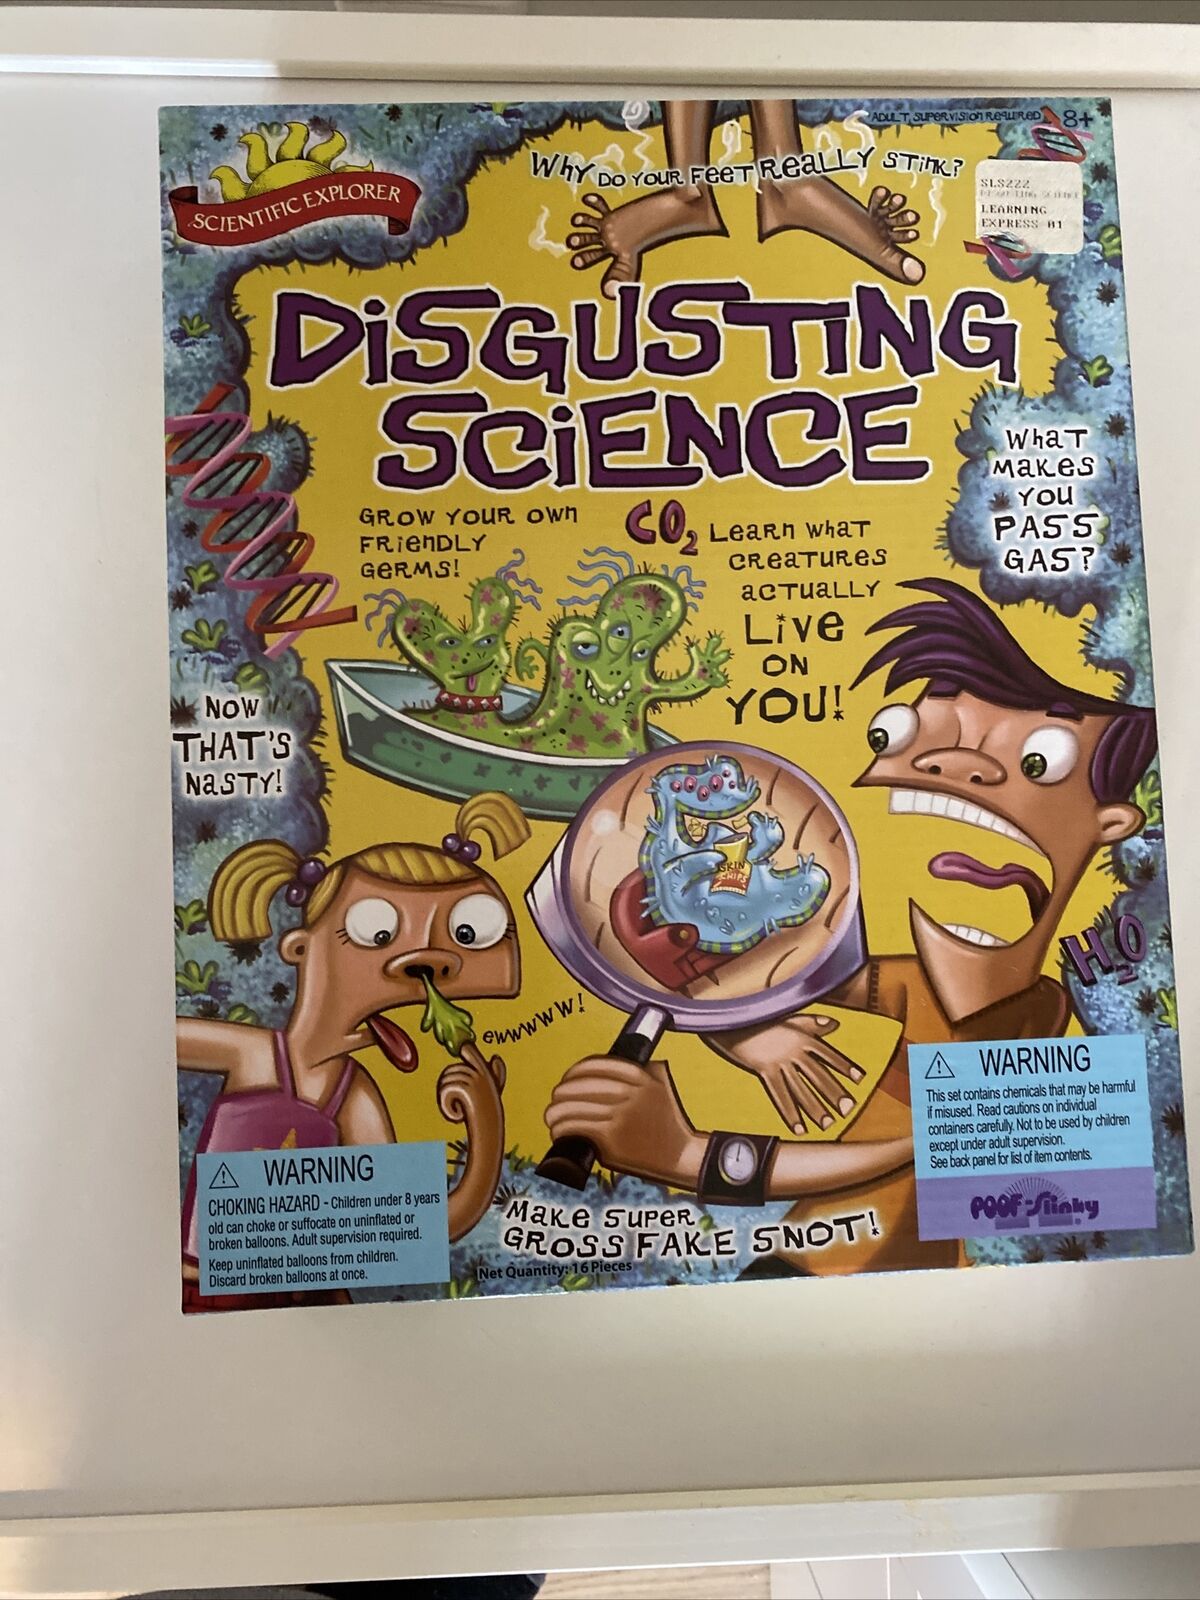 Scientific Explorer 0SA222 Disgusting Science for sale online